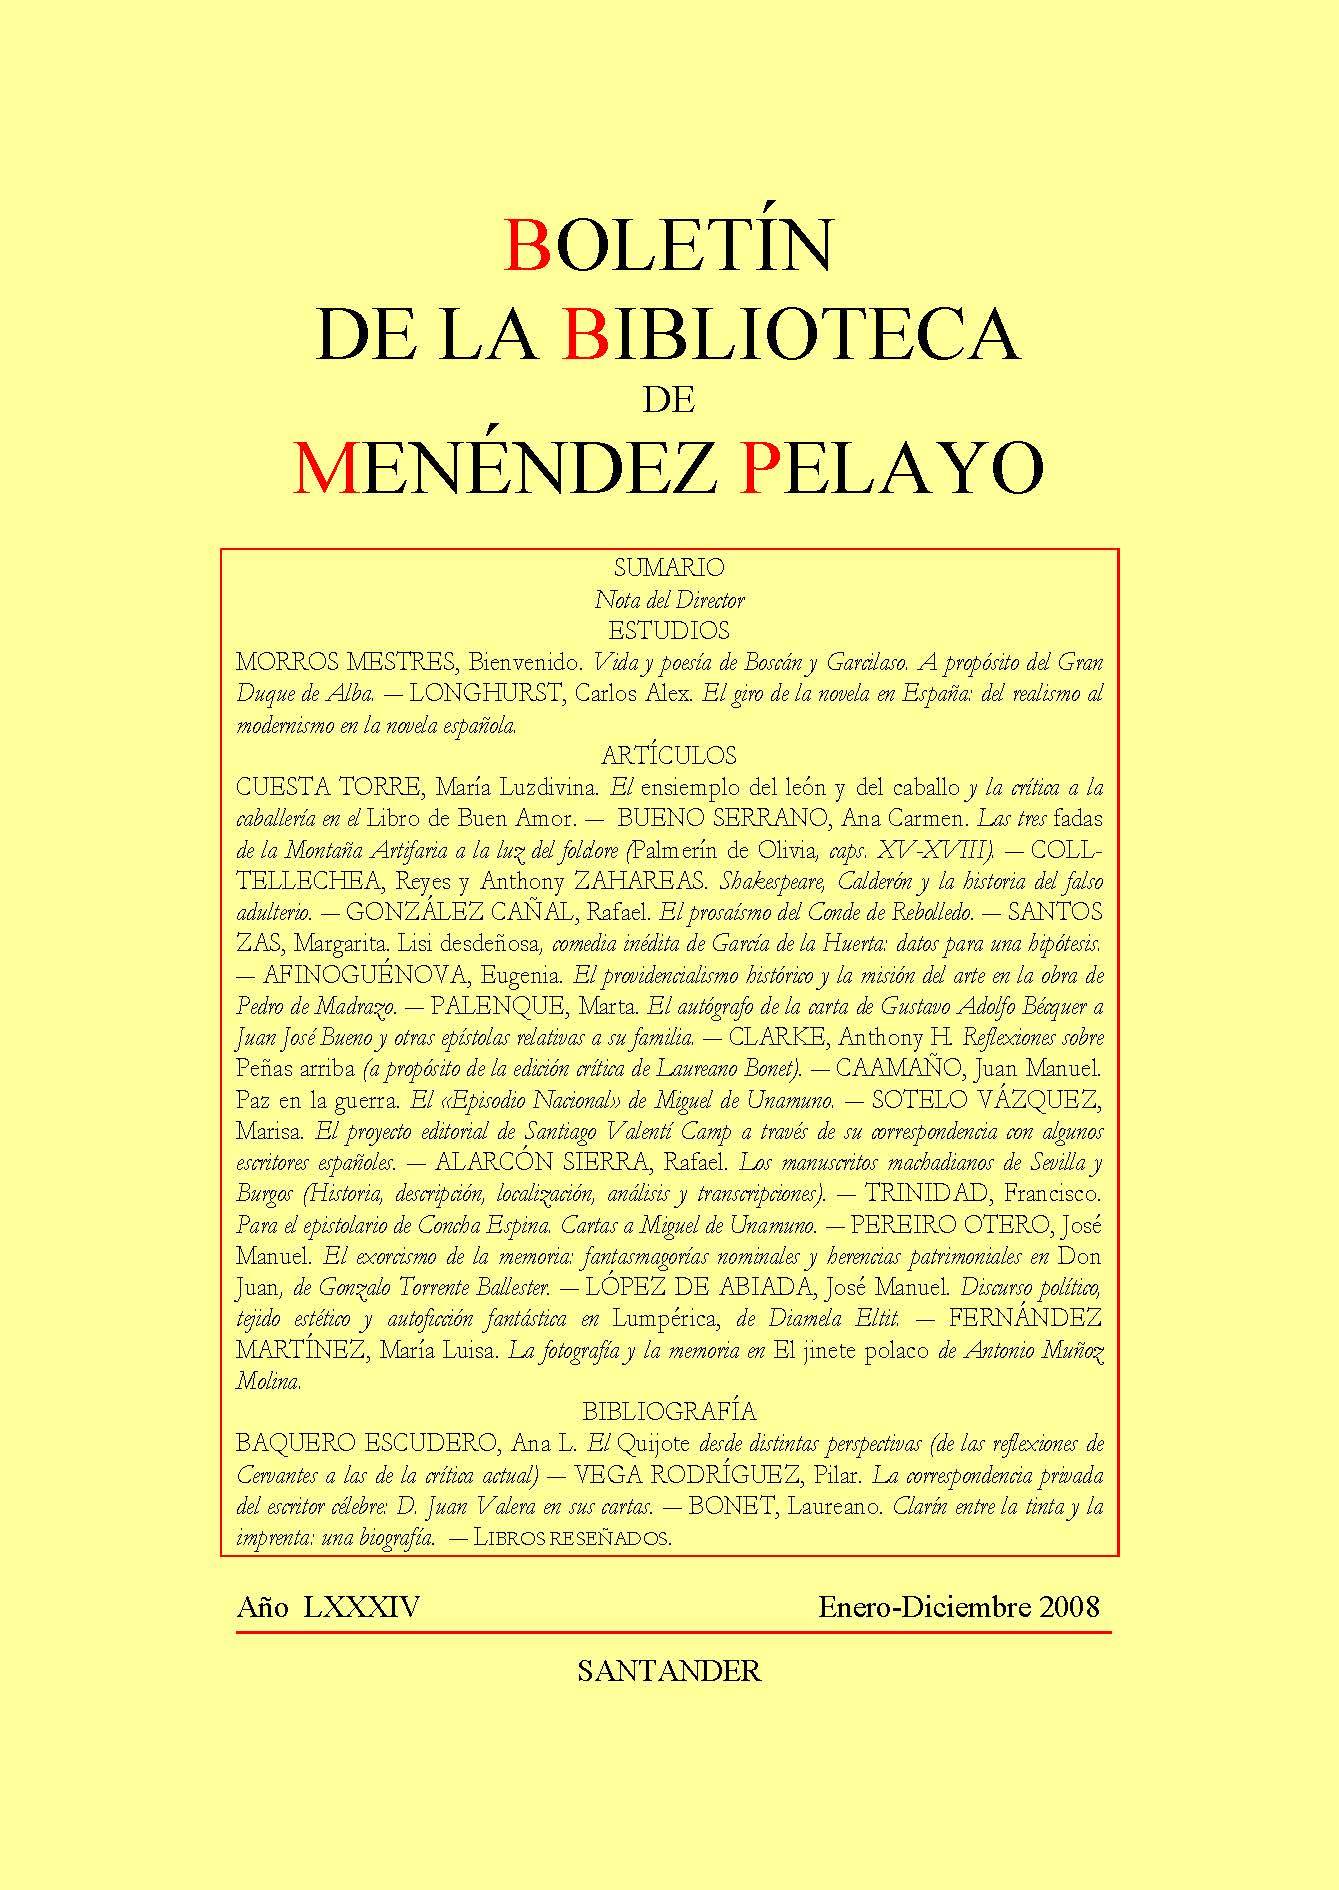 					Ver Vol. 84 Núm. único (2008): Boletín de la Biblioteca de Menéndez Pelayo. LXXXIV (2008)
				